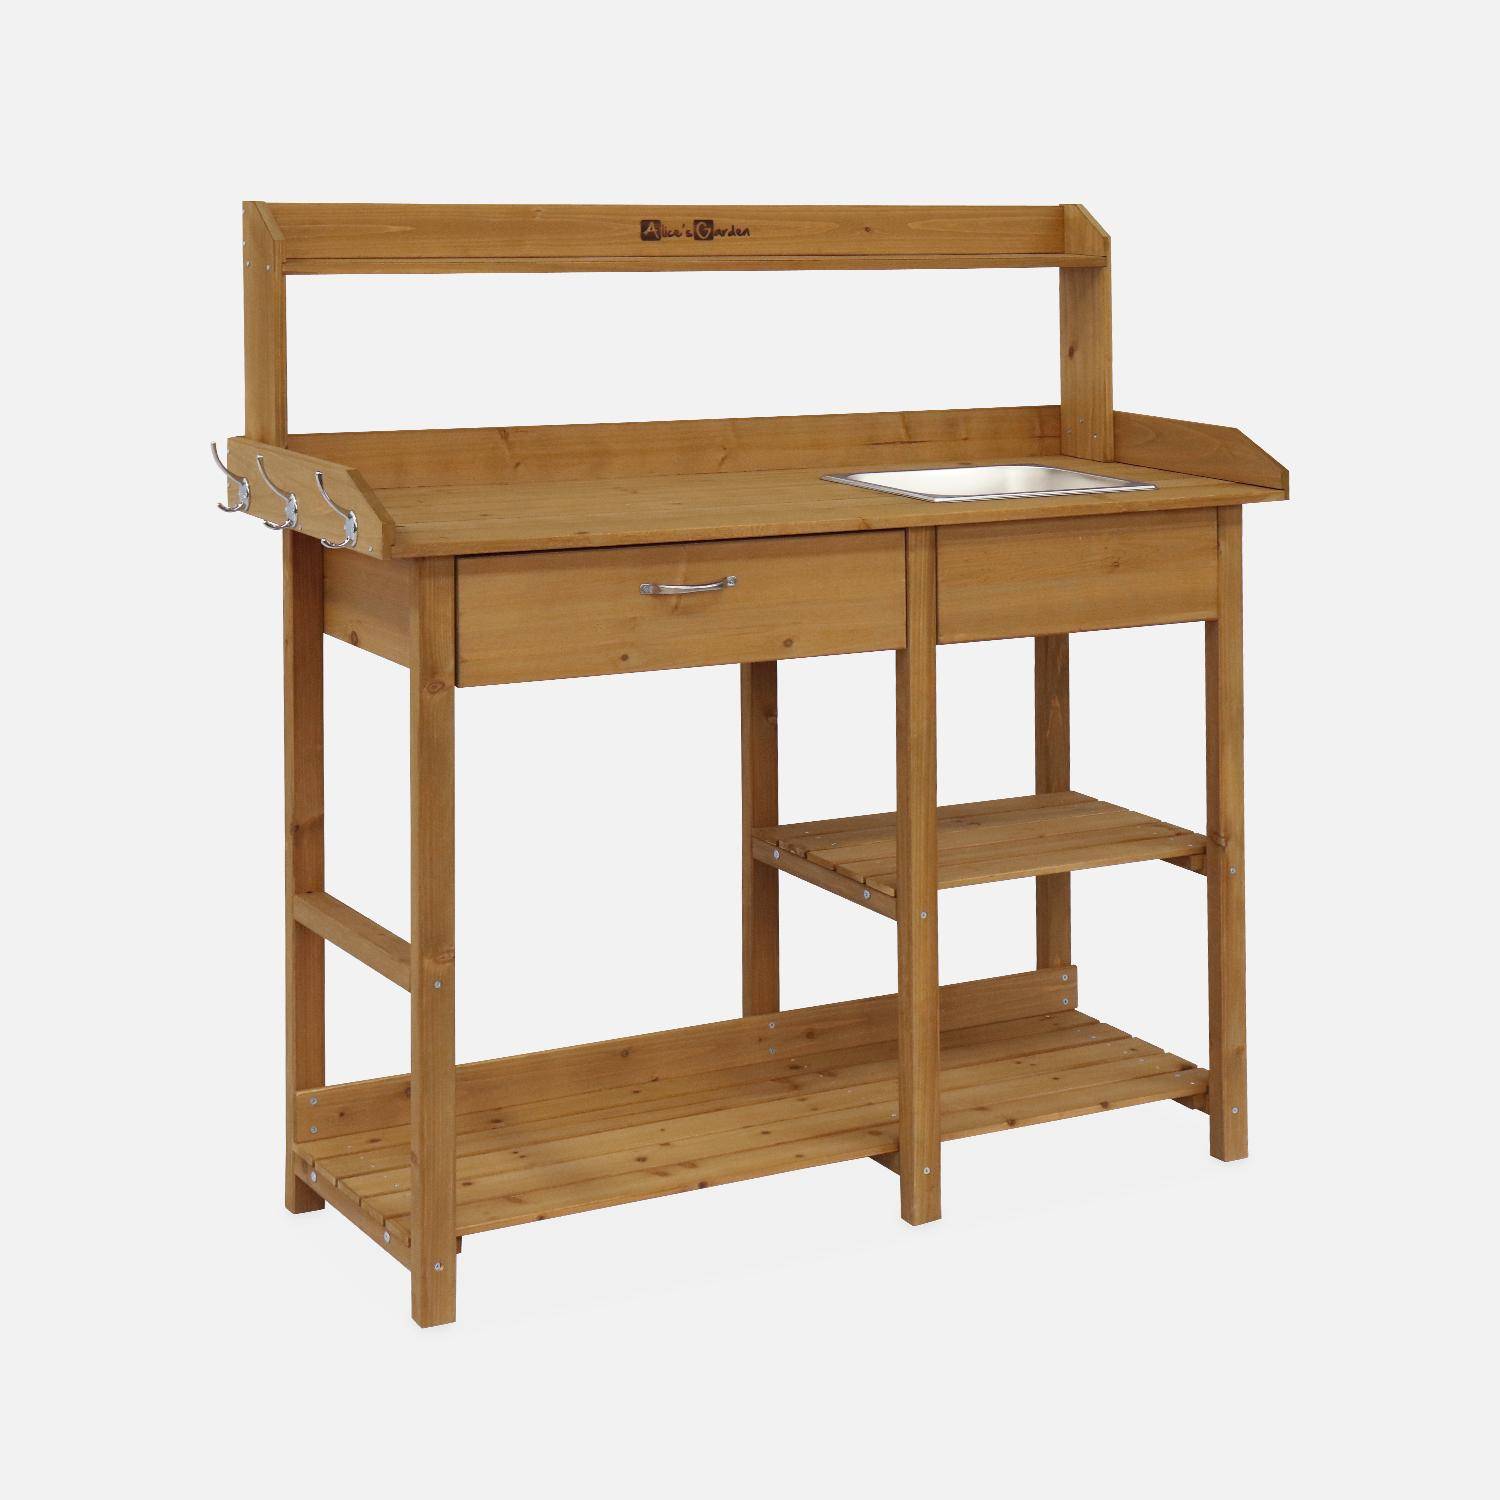 Capucine mesa de madera para macetas, 1 cajón, 2 estantes, 1 fregadero, ganchos Photo3